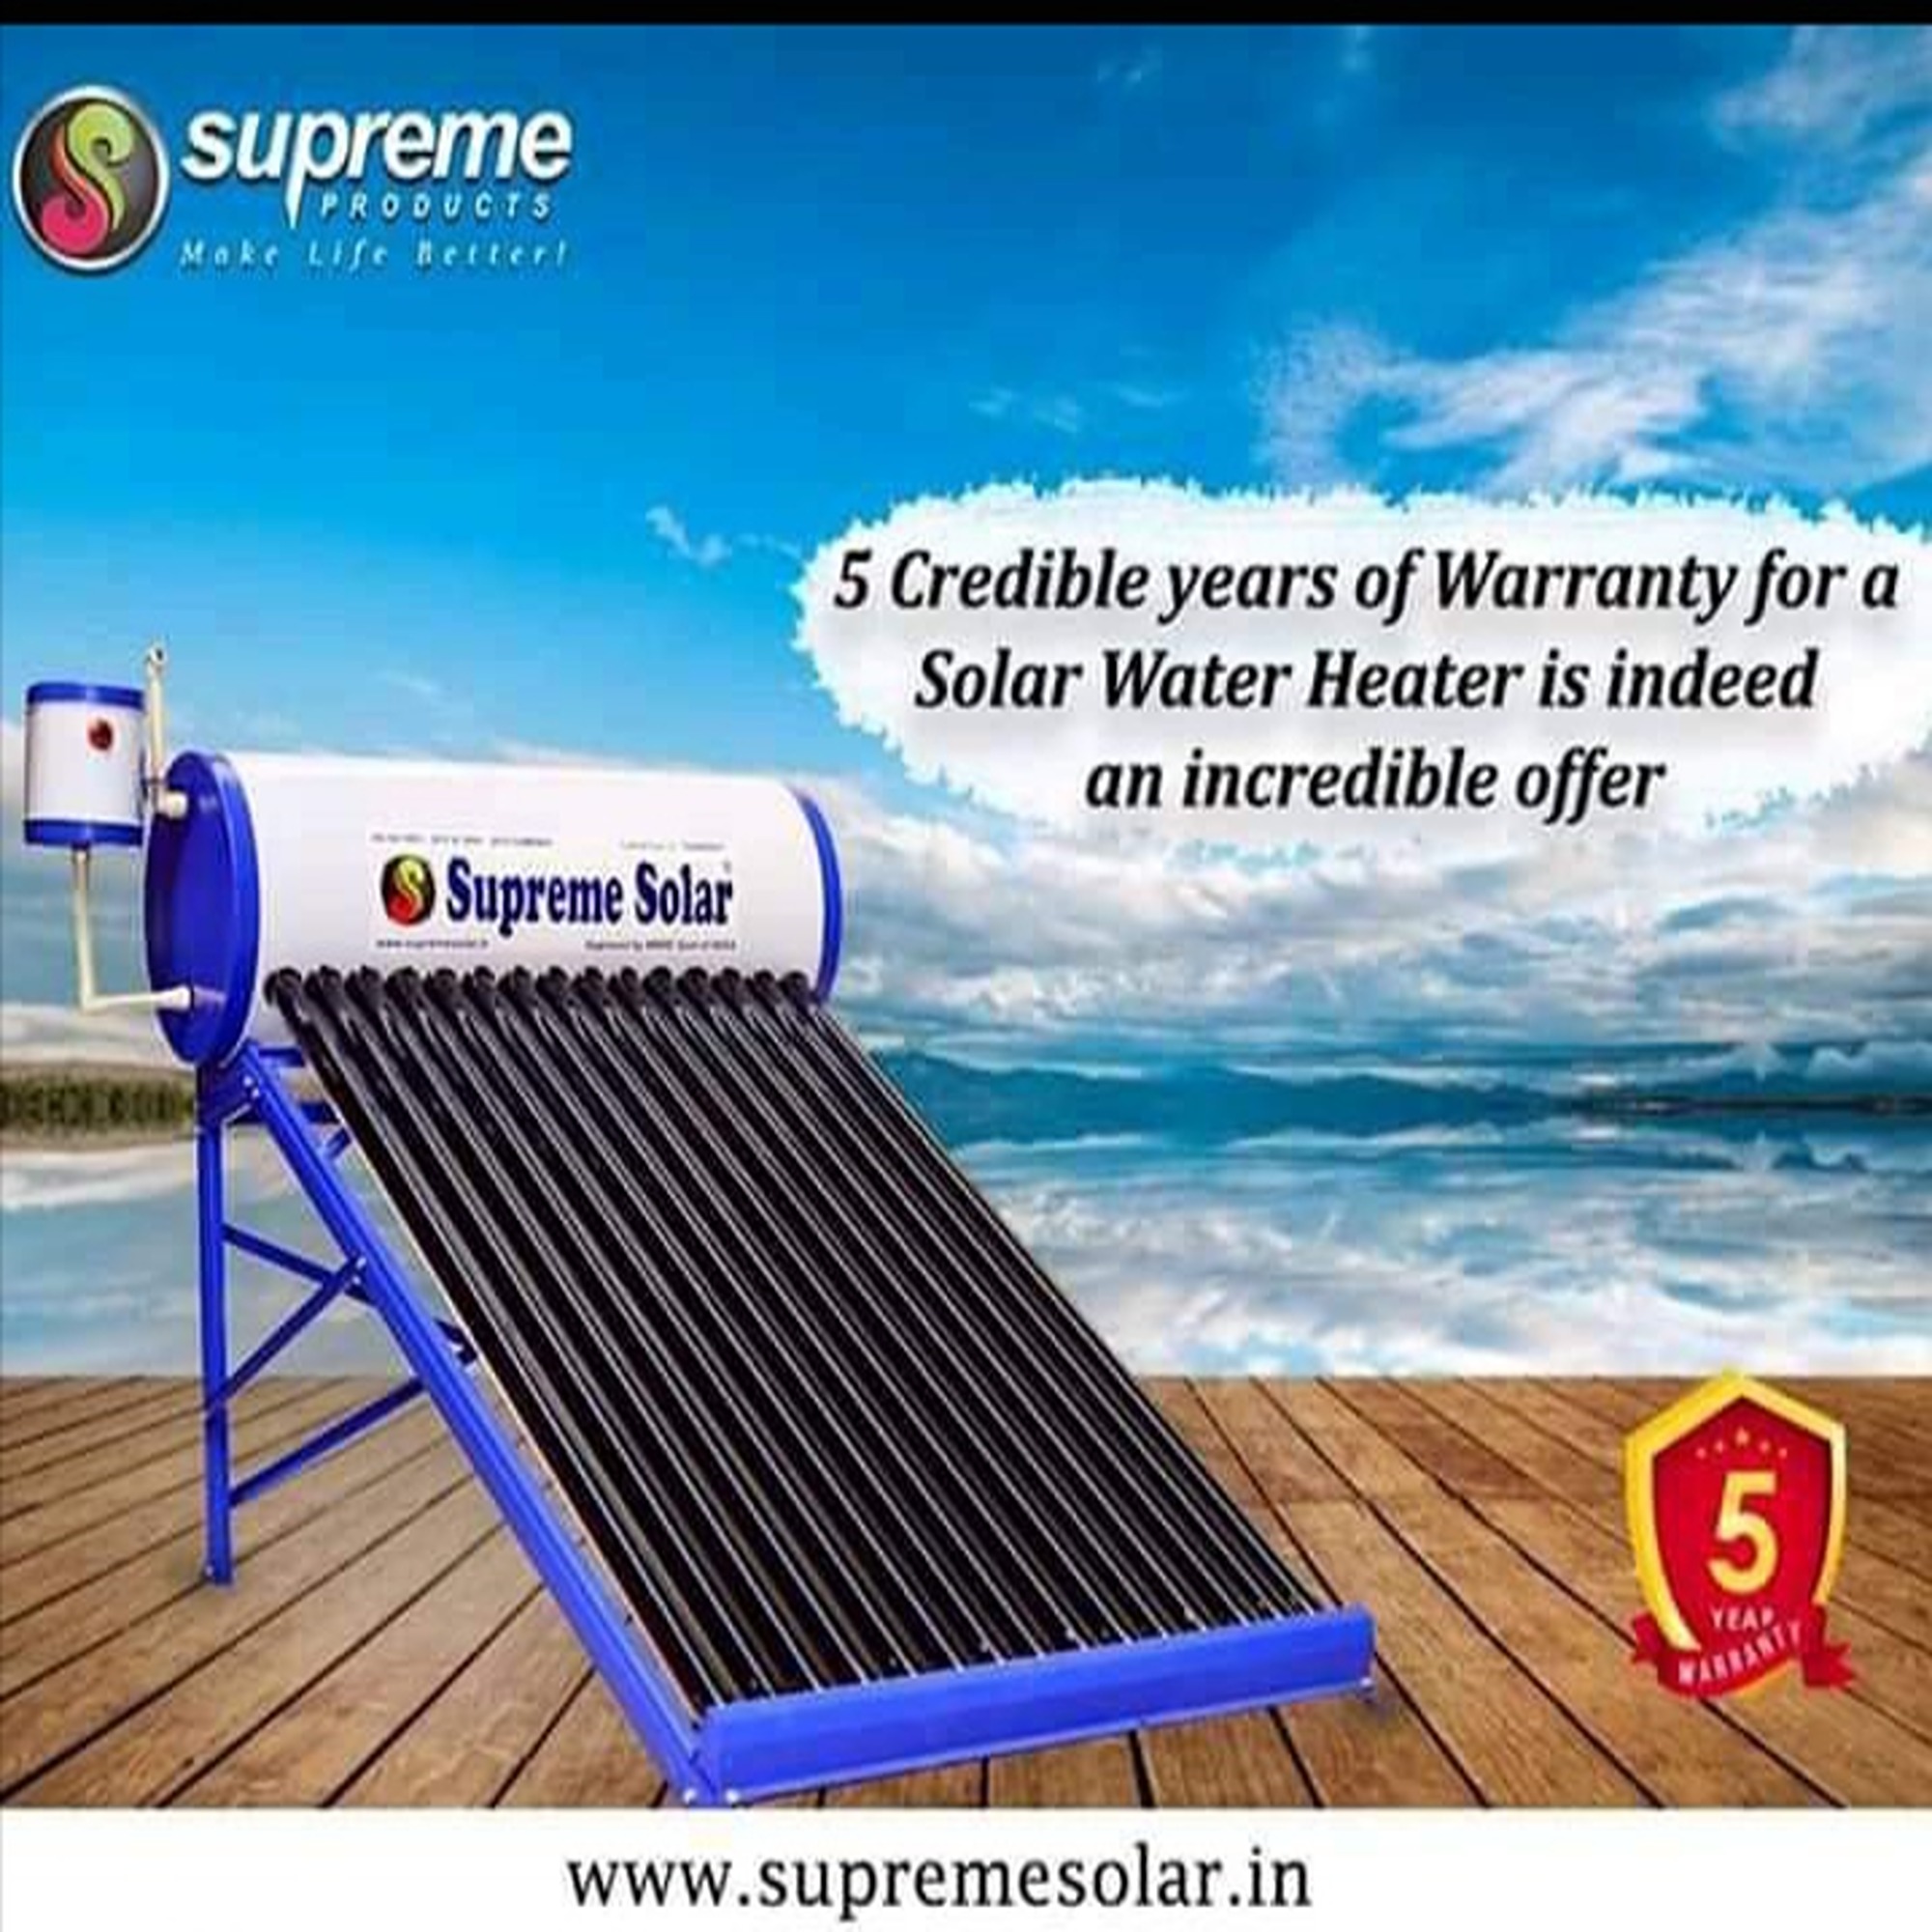 Supreme Solar 500 Ltr Cerami Coated Water Heater